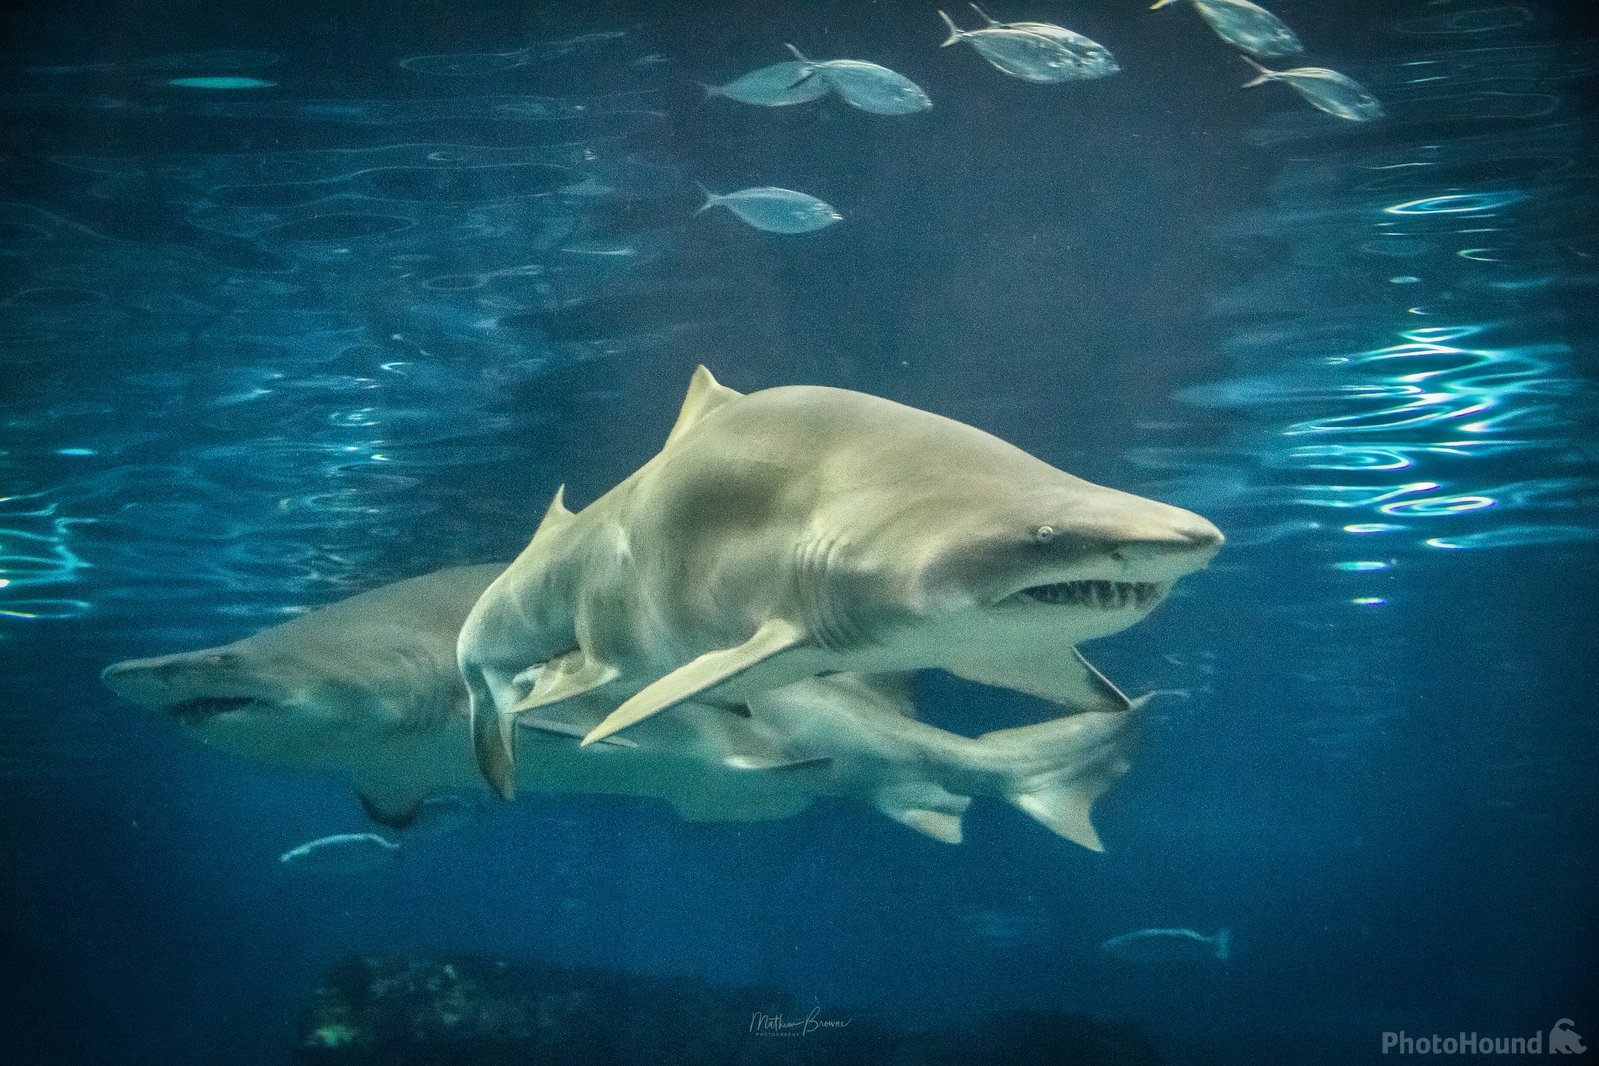 Image of Barcelona Aquarium by Mathew Browne